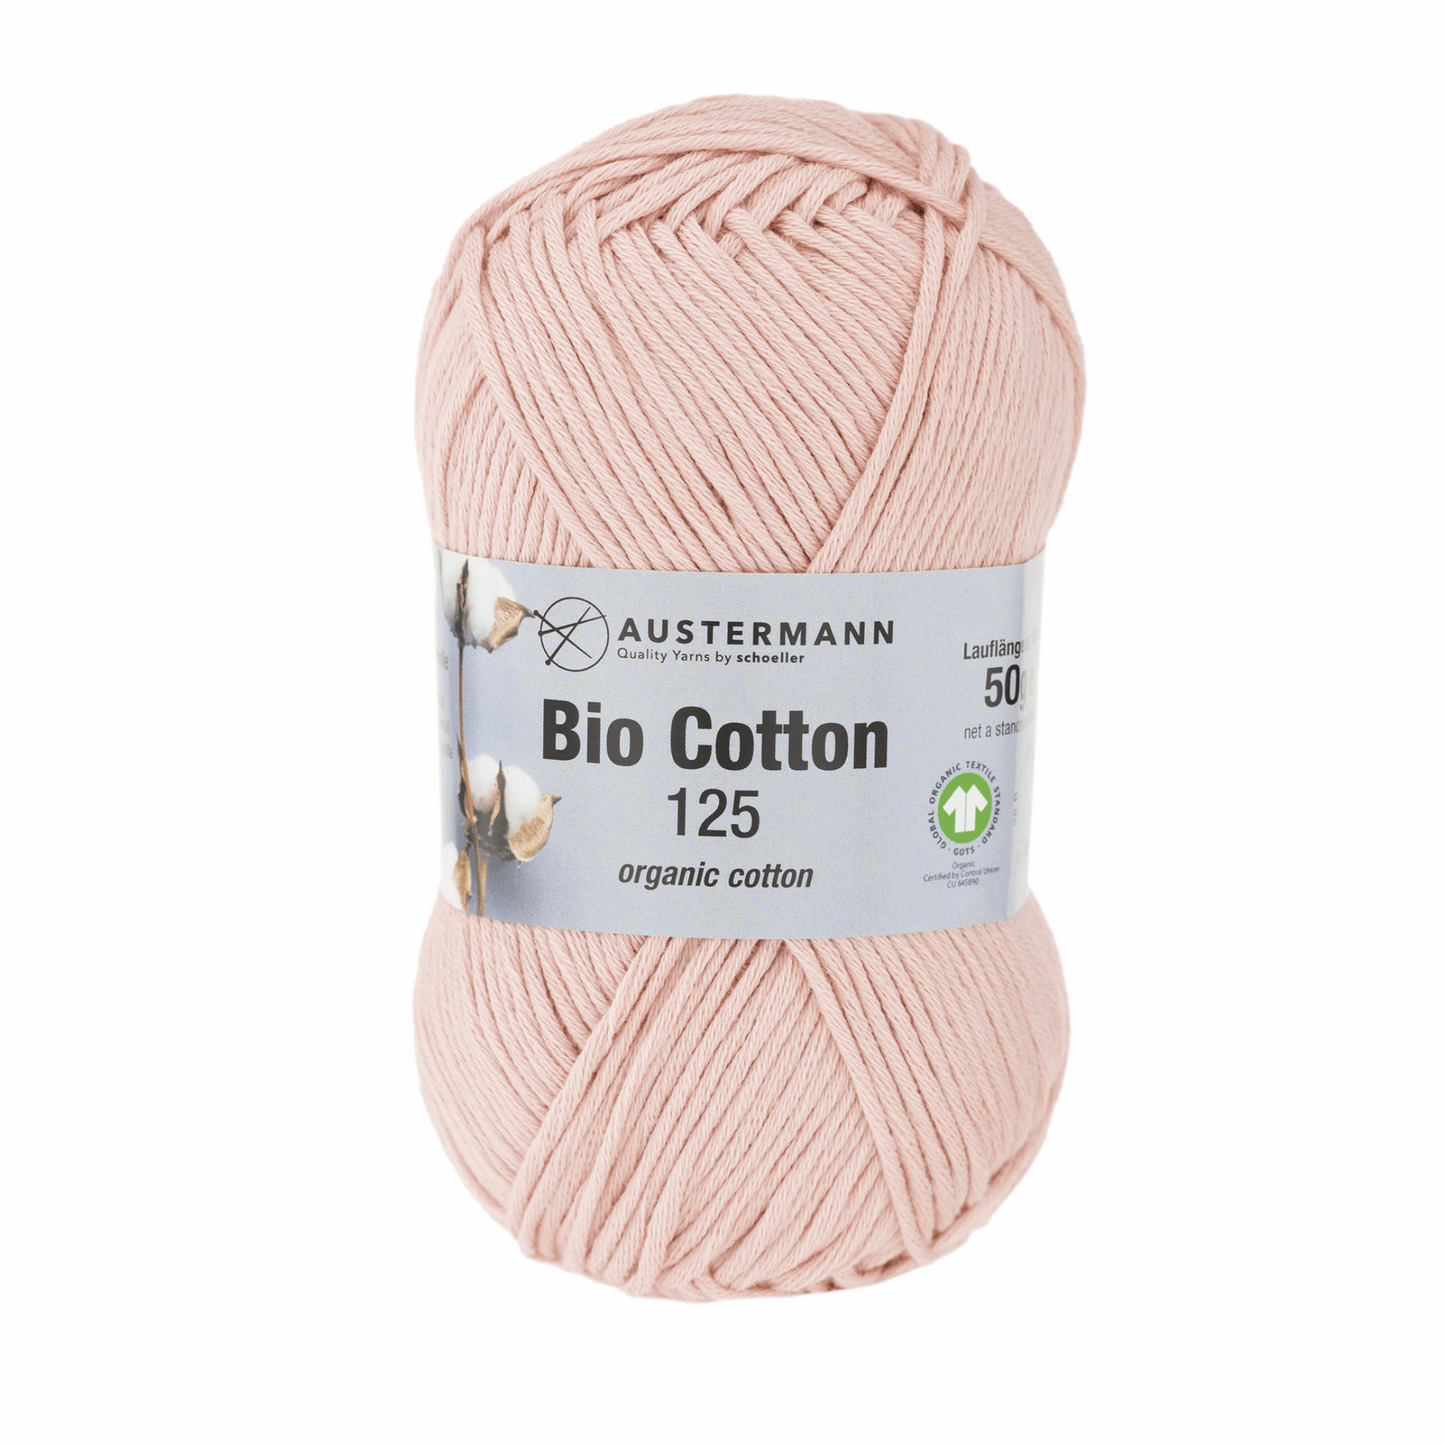 Gots bio Cotton 125 50g, 90345, Farbe 6, puder